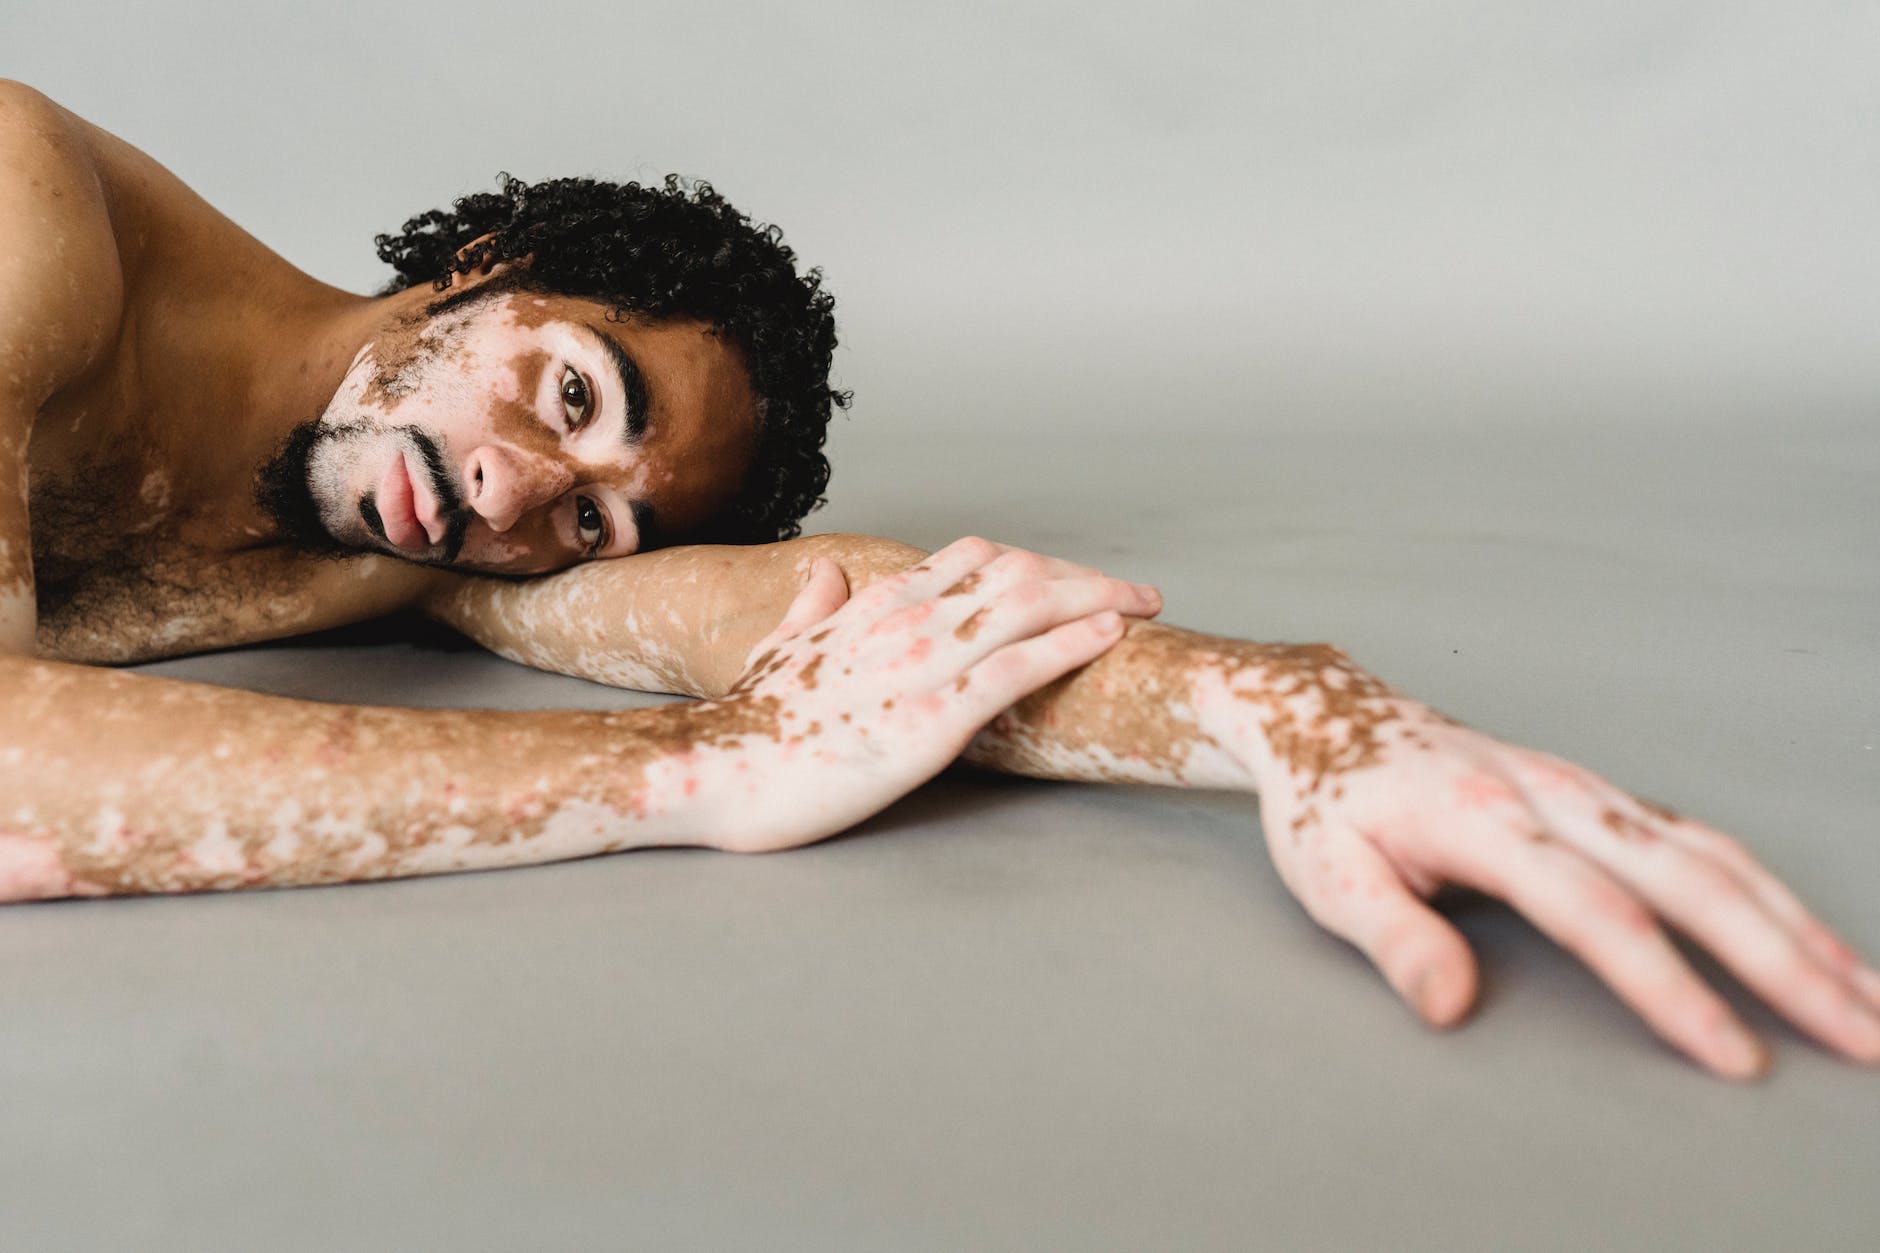 black man with vitiligo lying on floor of studio